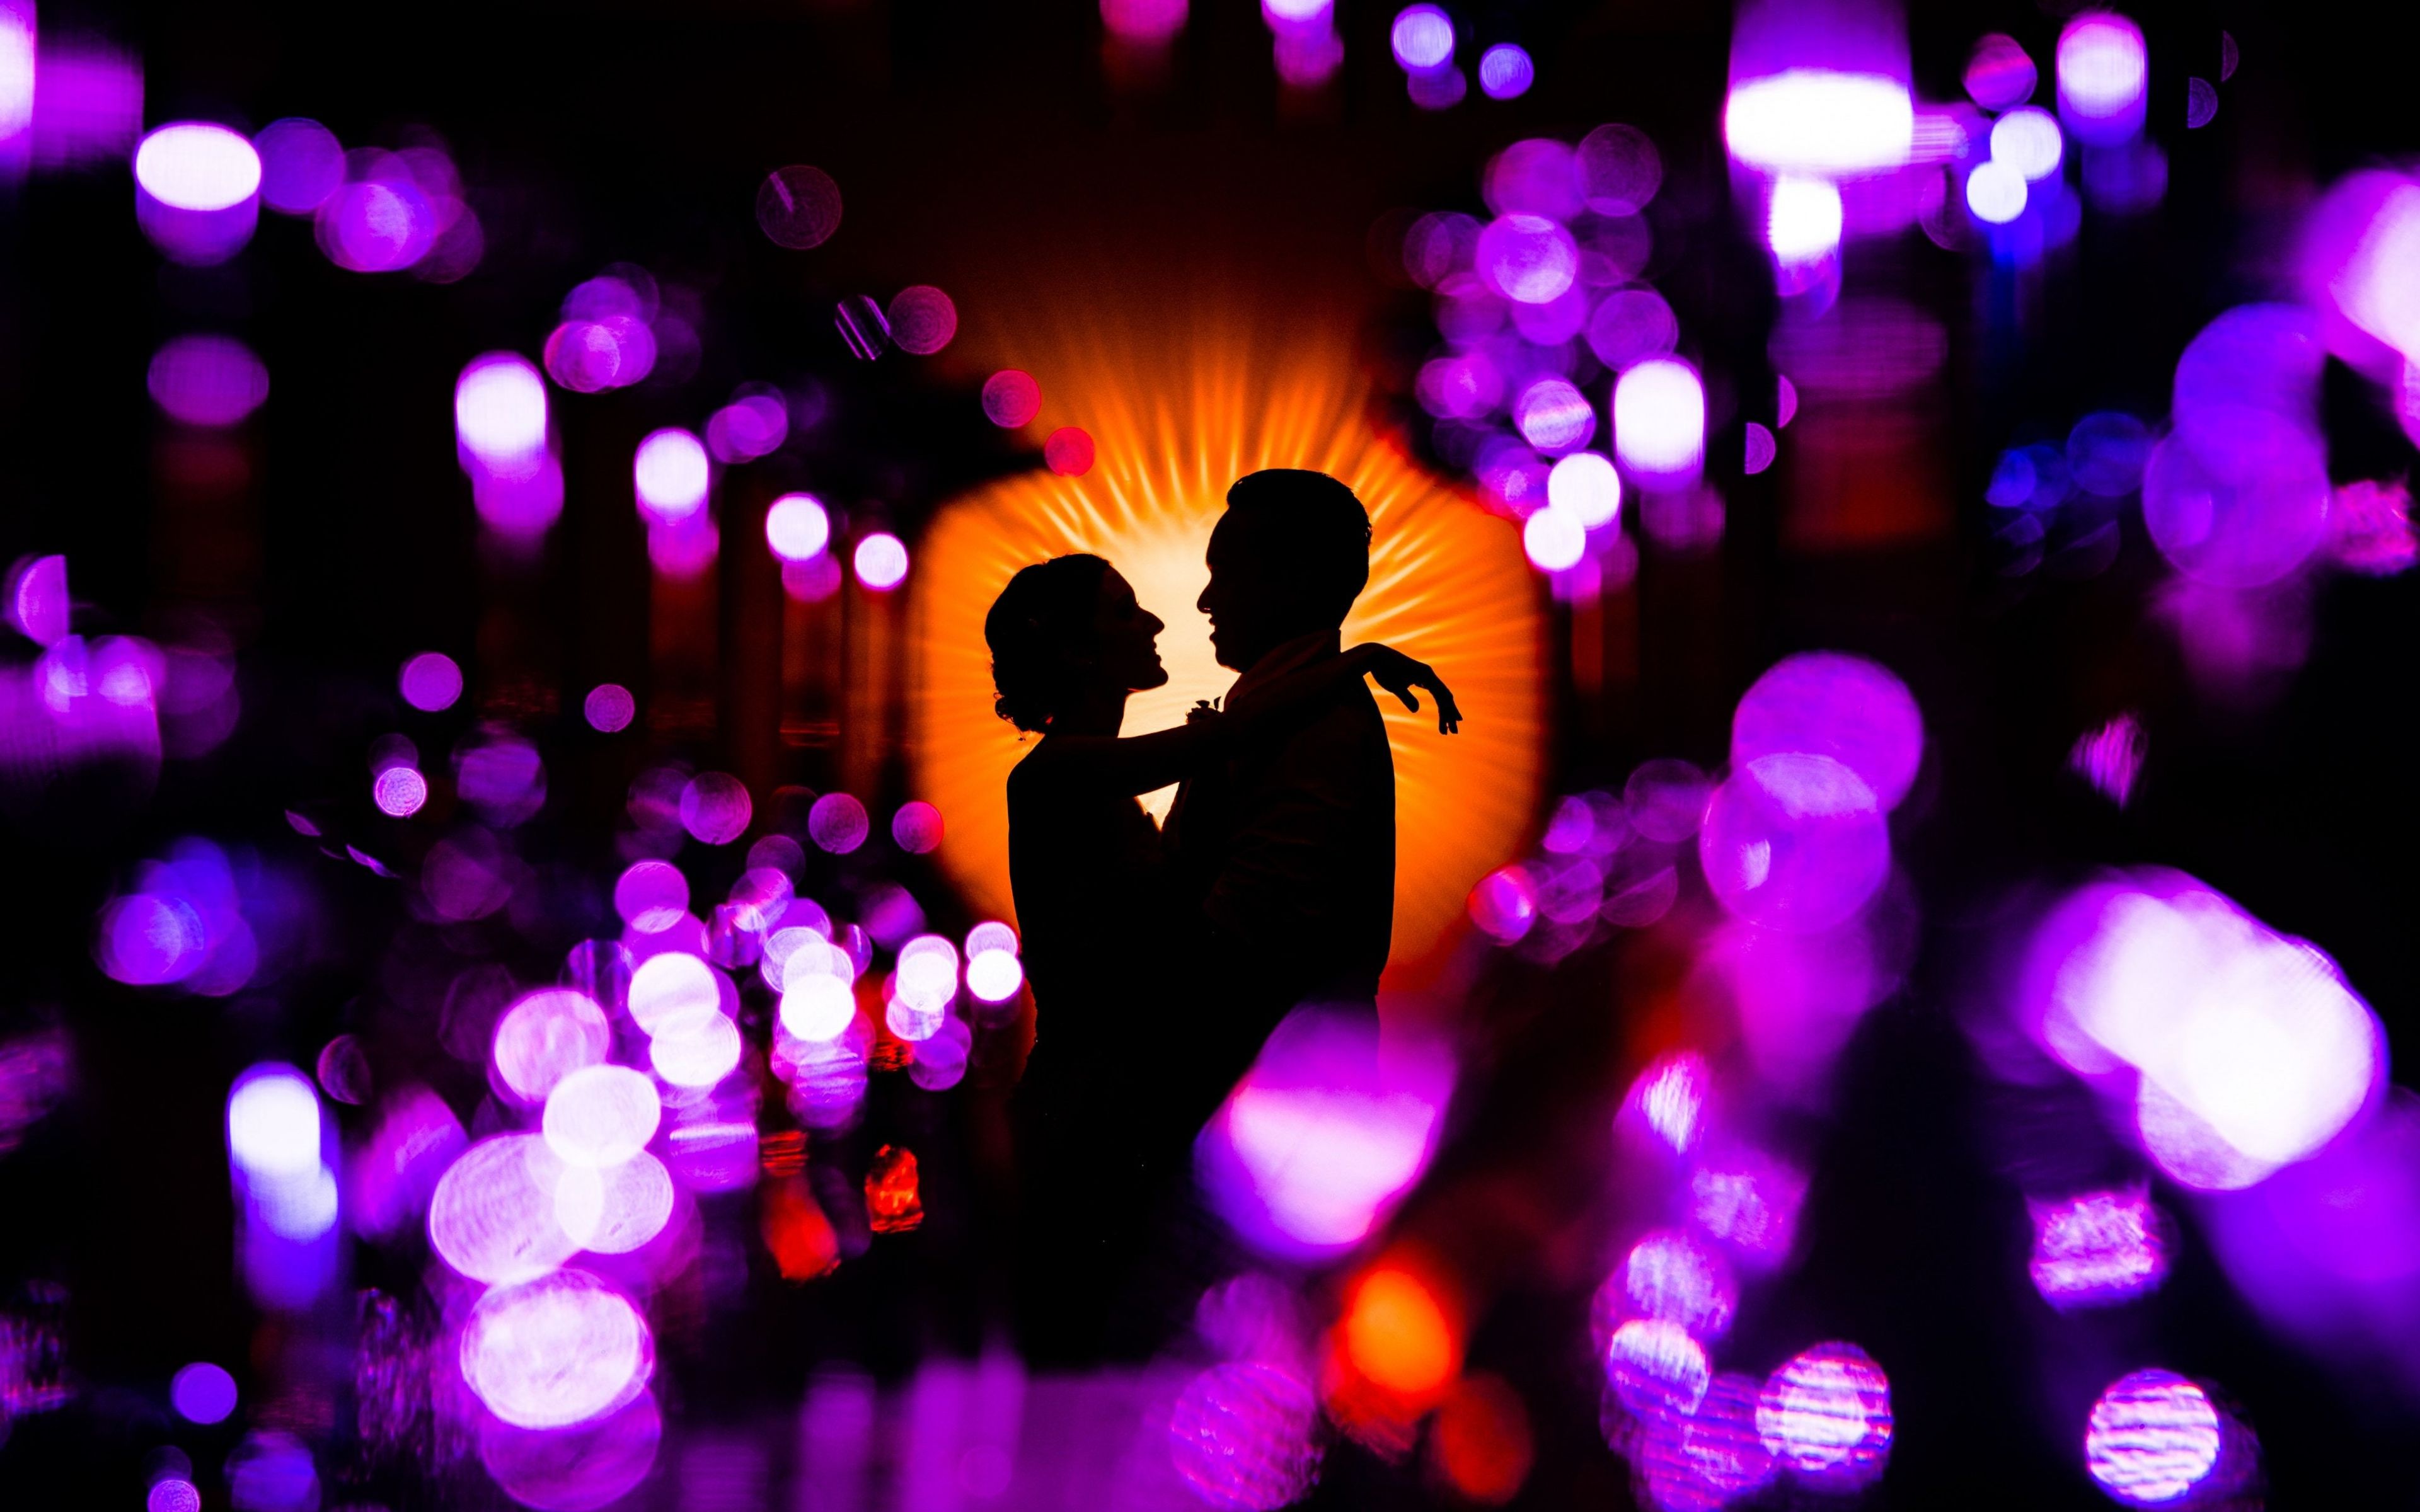 Download 3840x2400 wallpaper couple, romantic love, silhouette, bokeh, purple, 4k, ultra HD 16: widescreen, 3840x2400 HD image, background, 15289